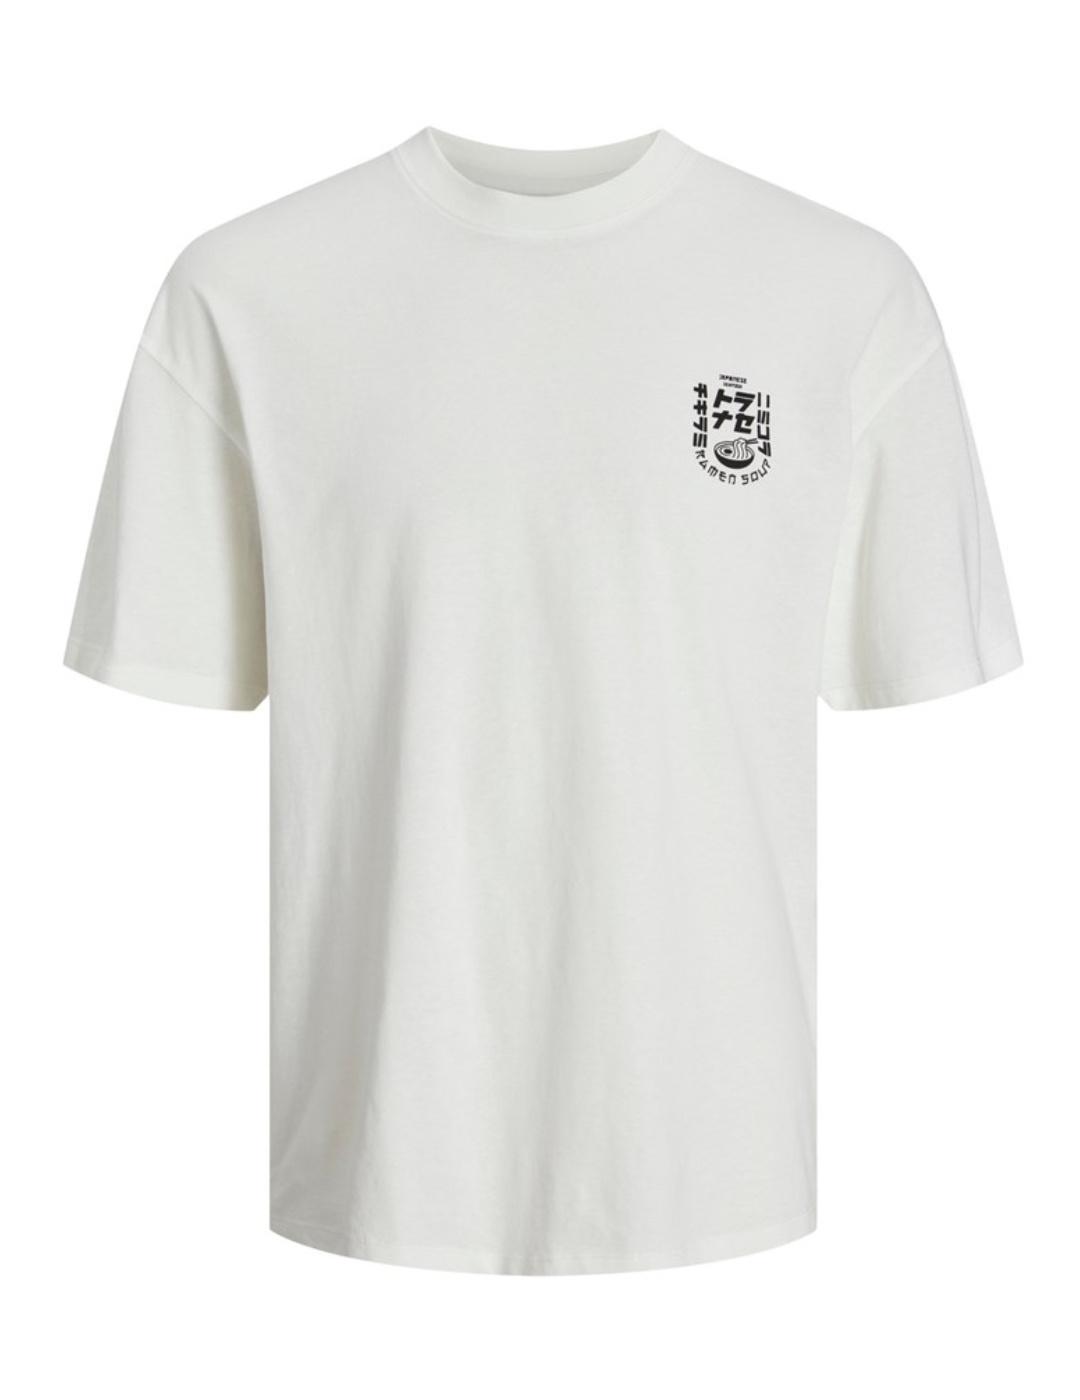 Camiseta Jack&Jones Drik blanco manga corta para hombre